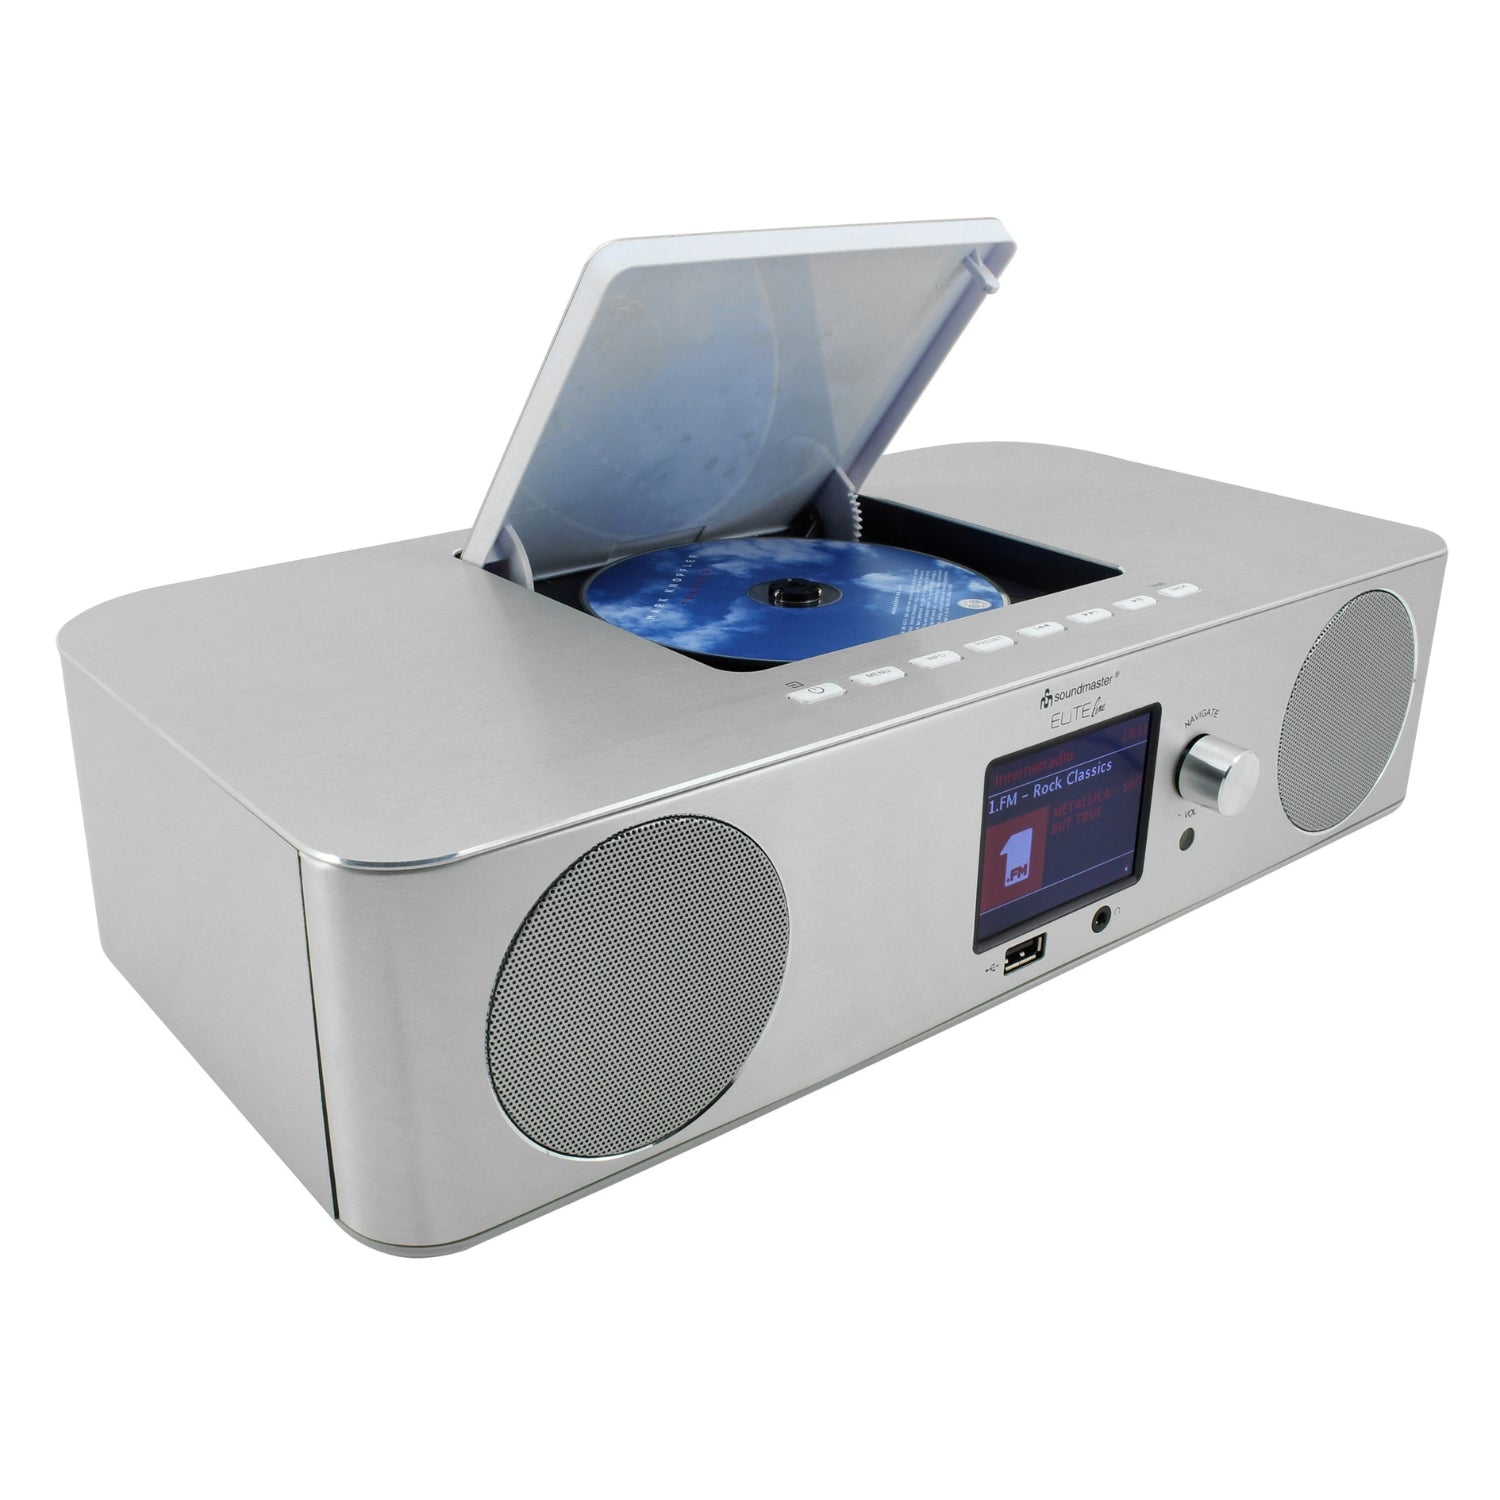 Soundmaster EliteLine ICD2060SI Stereoanlage Kompaktanlage Internetradio  DAB+ USB-MP3 SPOTIFY CD-MP3 App-Steuerung